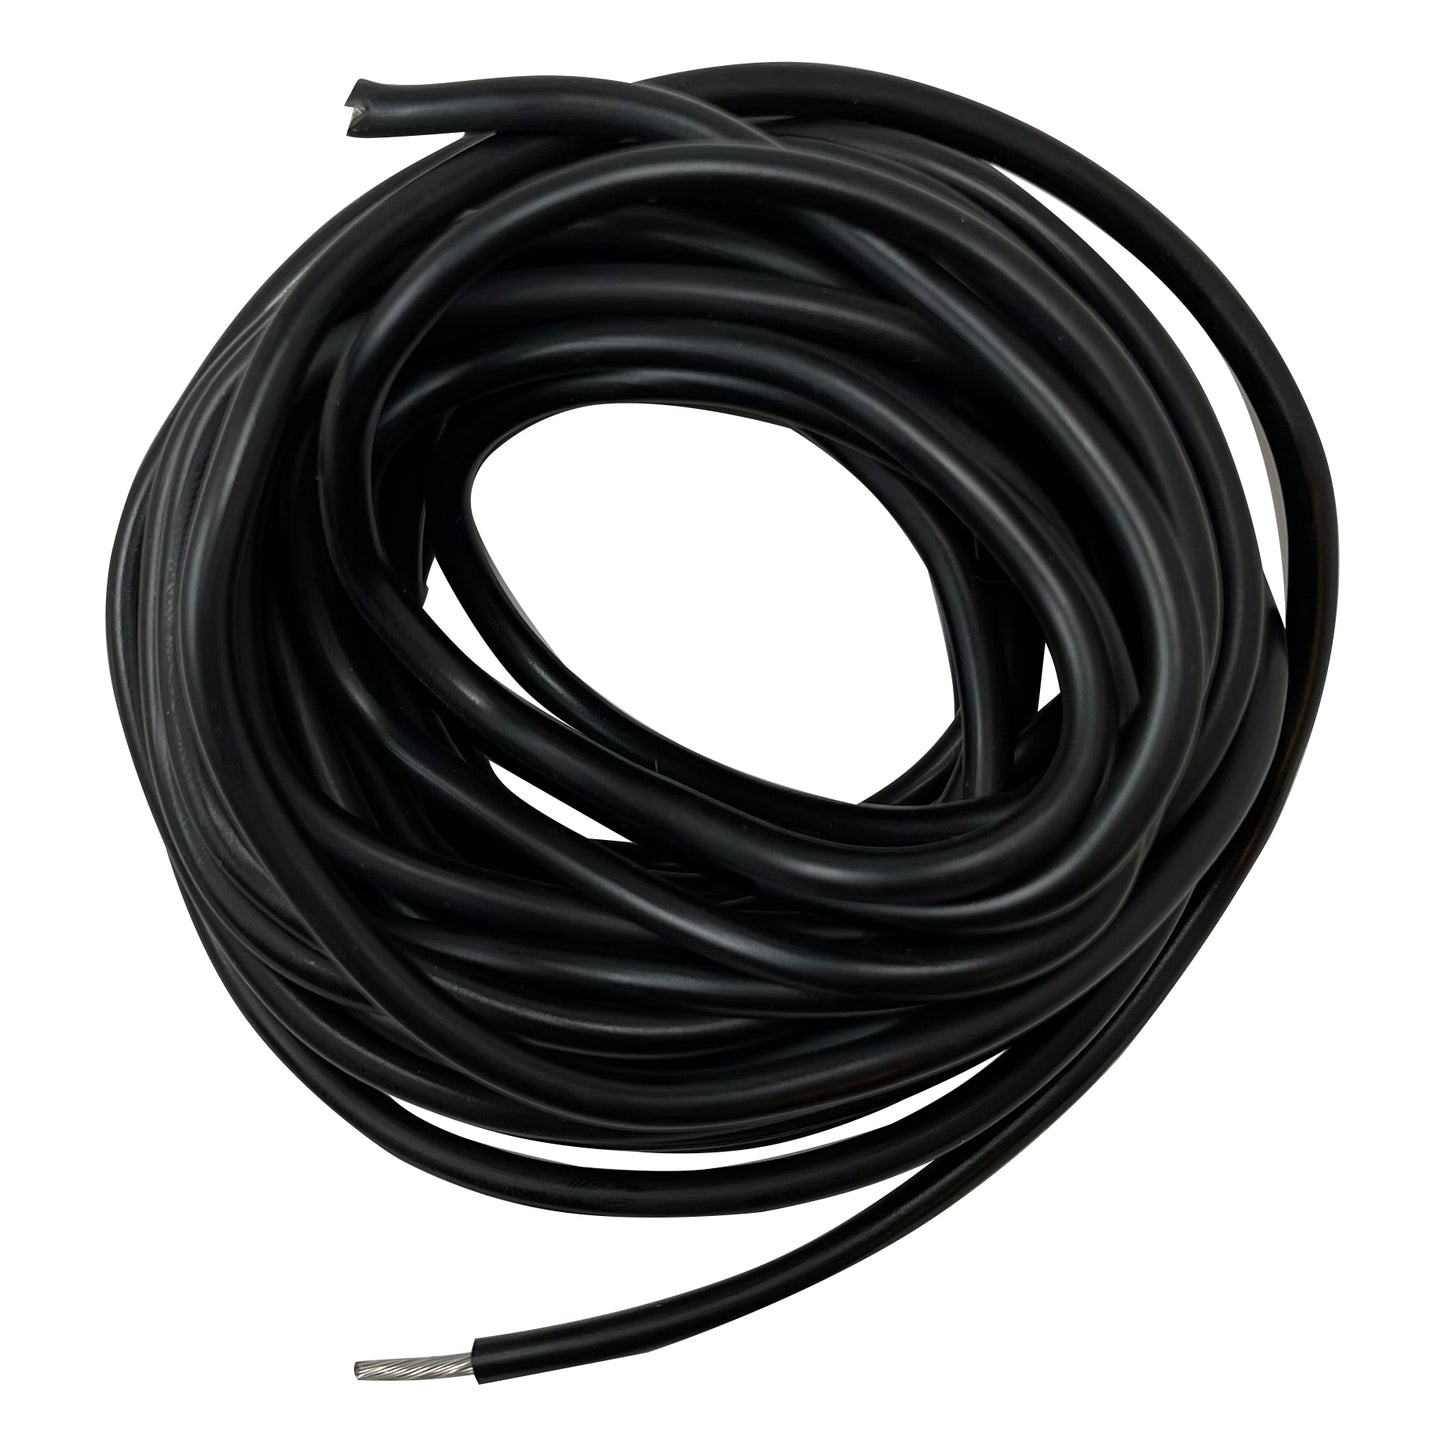 14 Gauge Universal Automotive Fusible Link Wire - 100' FT Spool